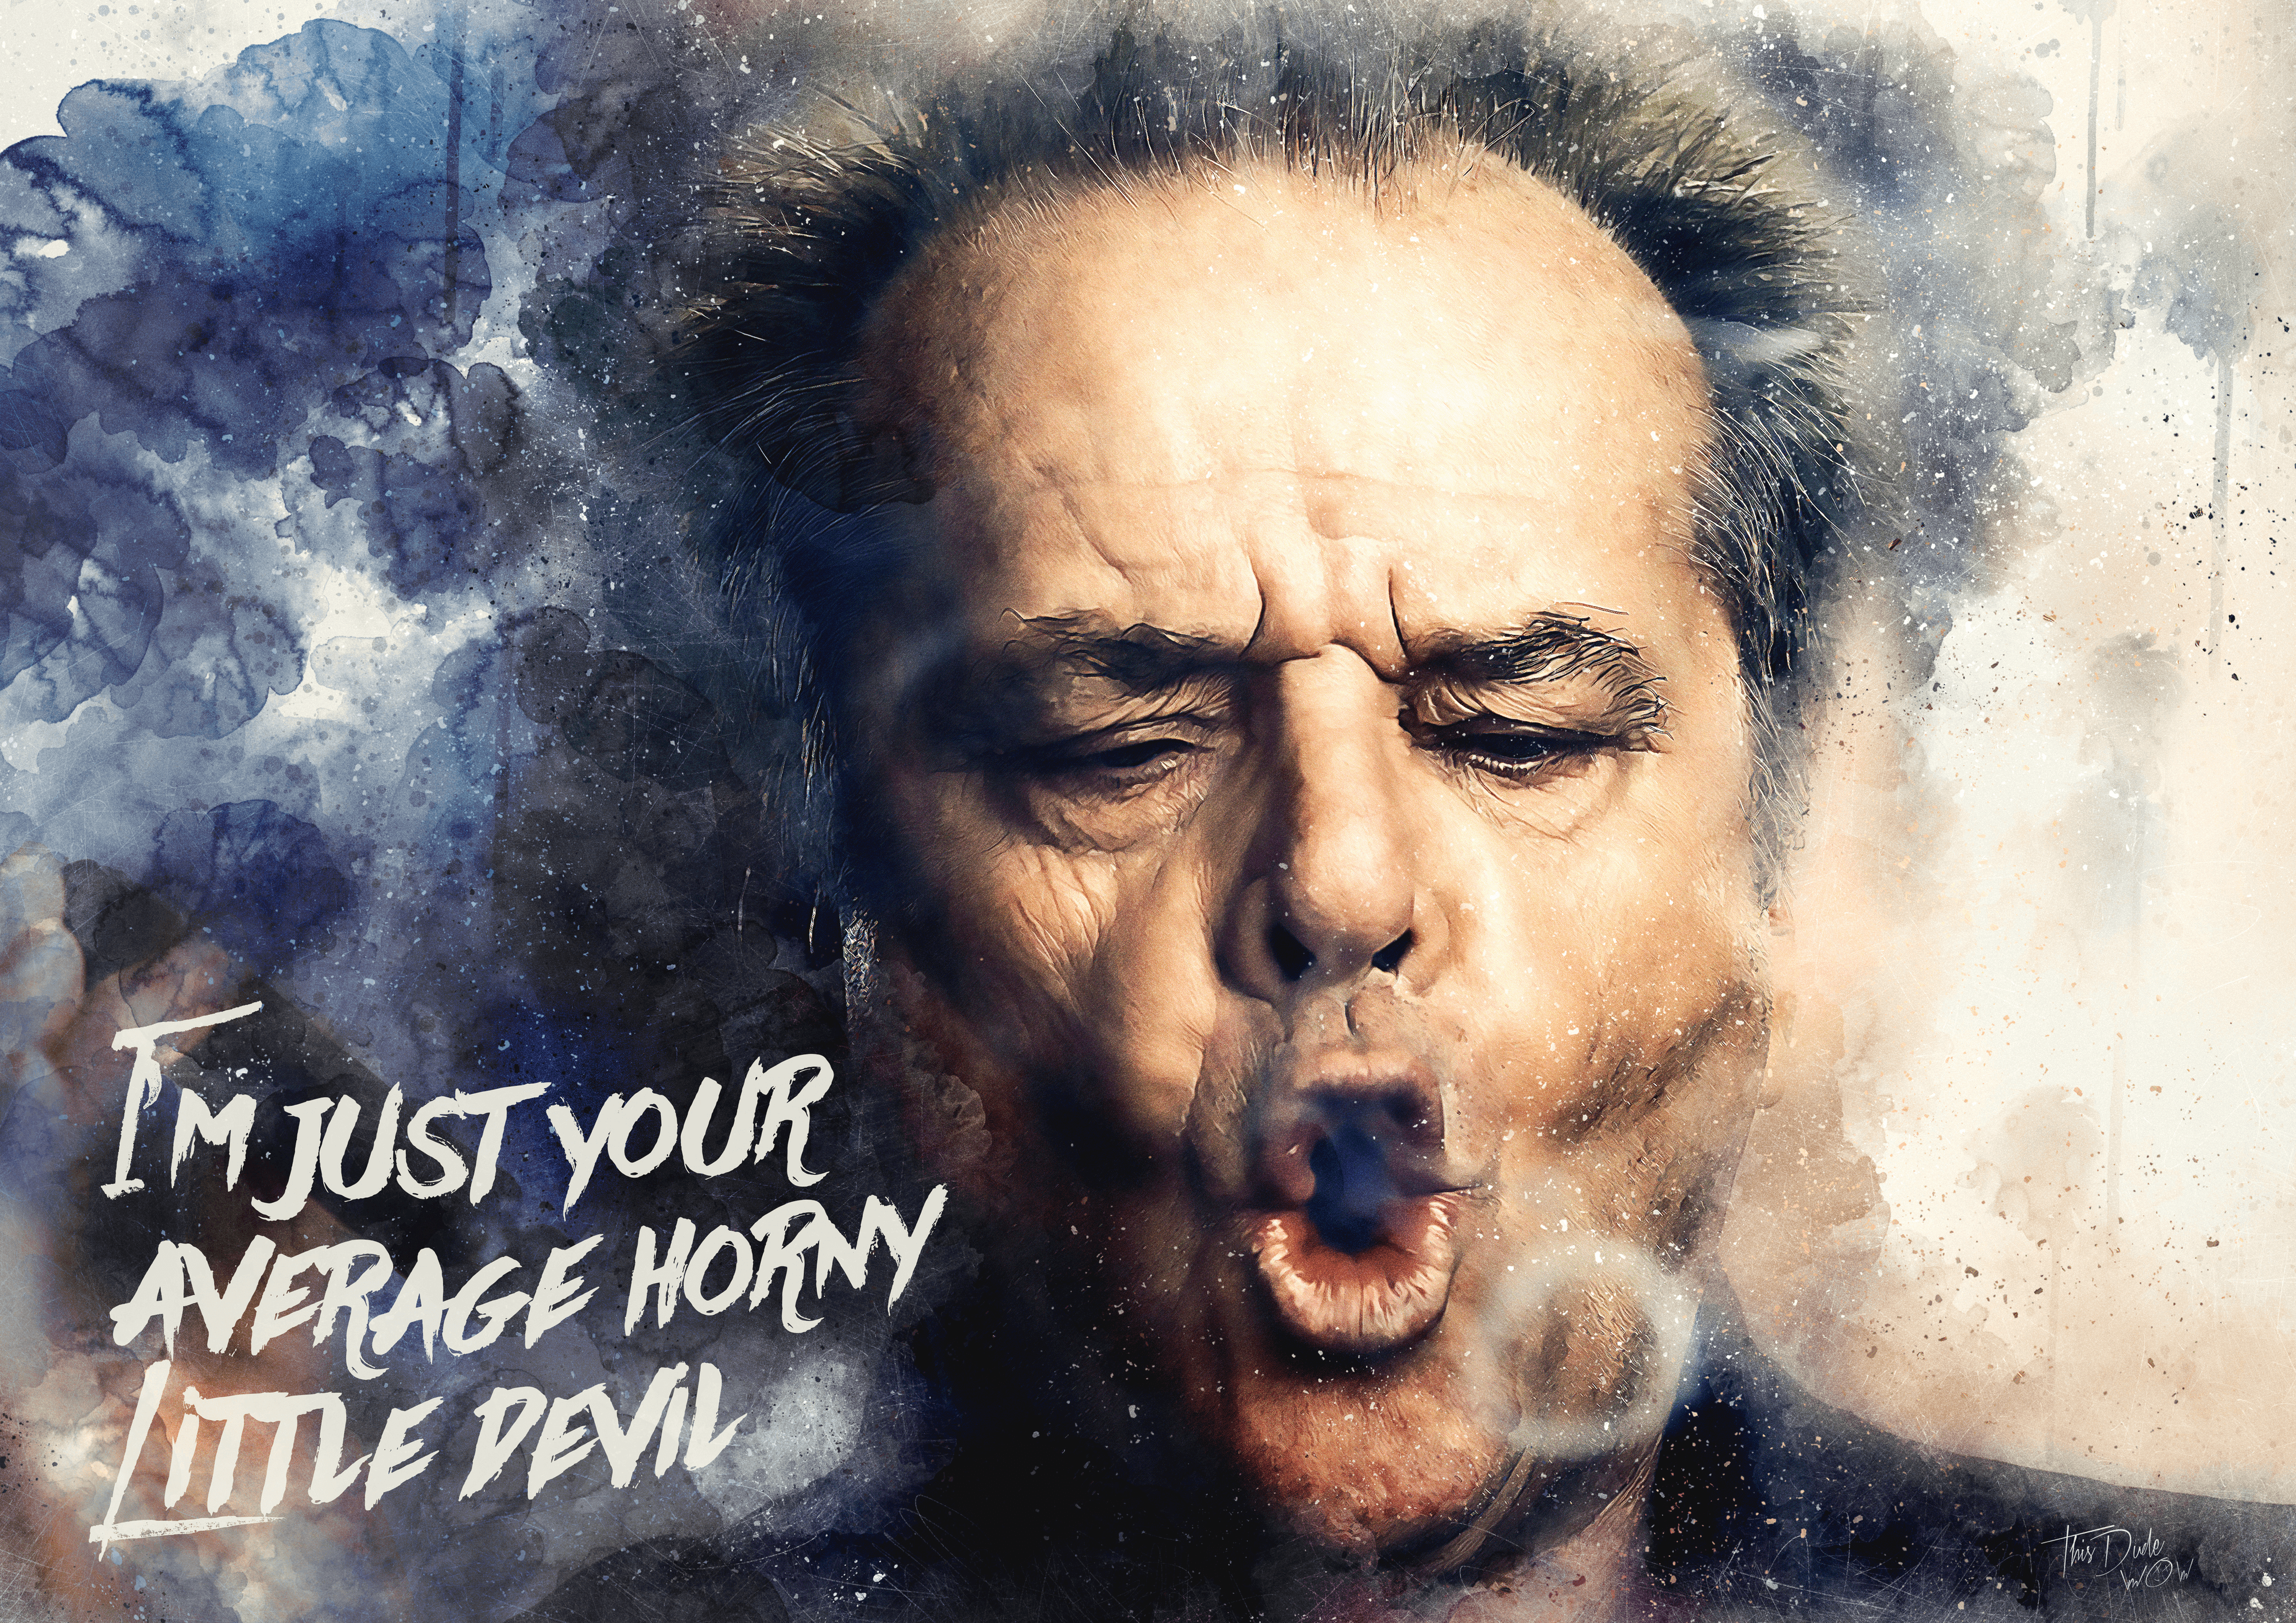 Jack Nicholson" Horny Little Devil"